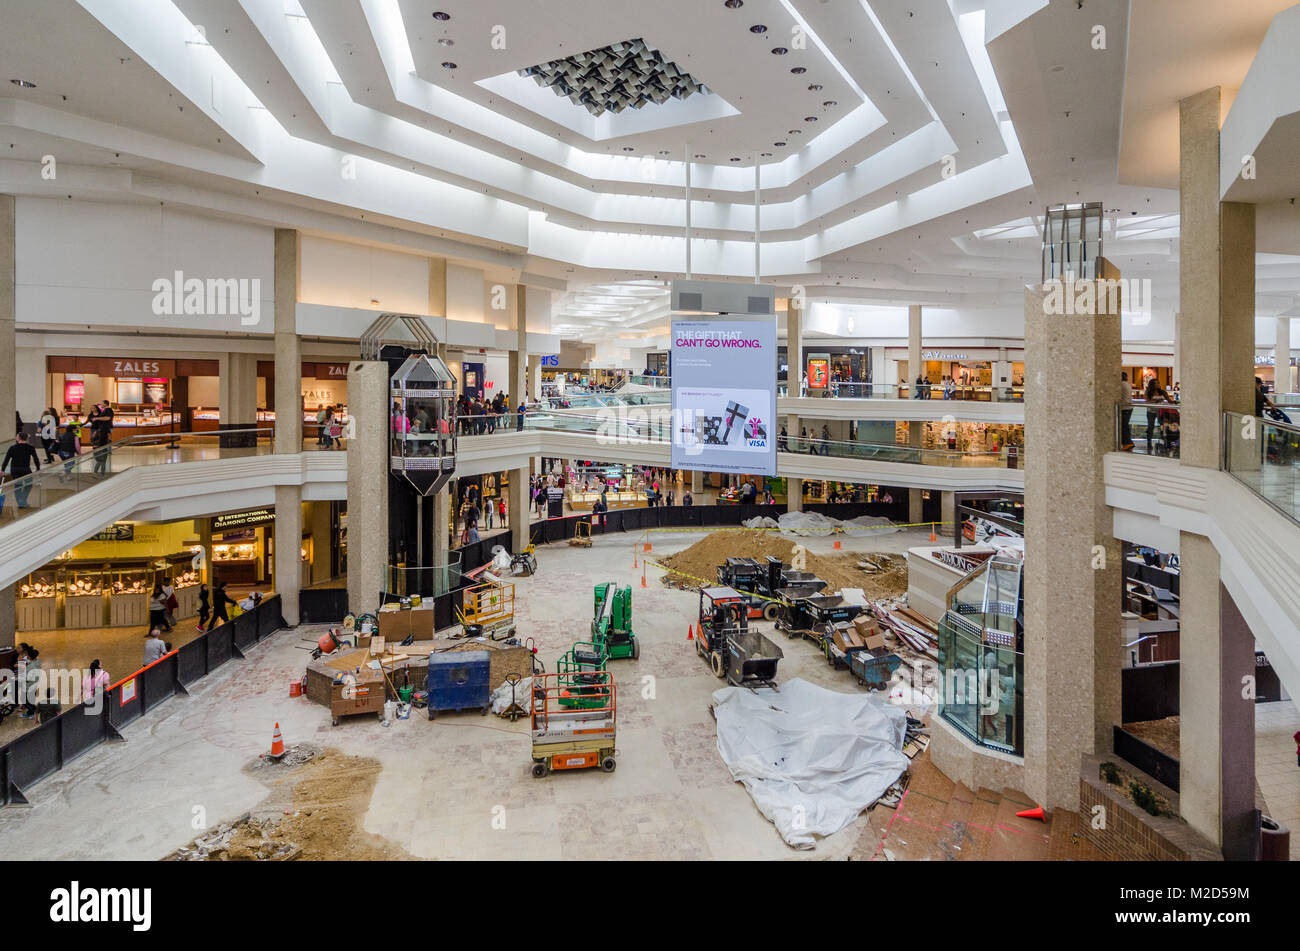 Interior of Woodfield Mall in Schaumburg undergoing renovation Stock Photo